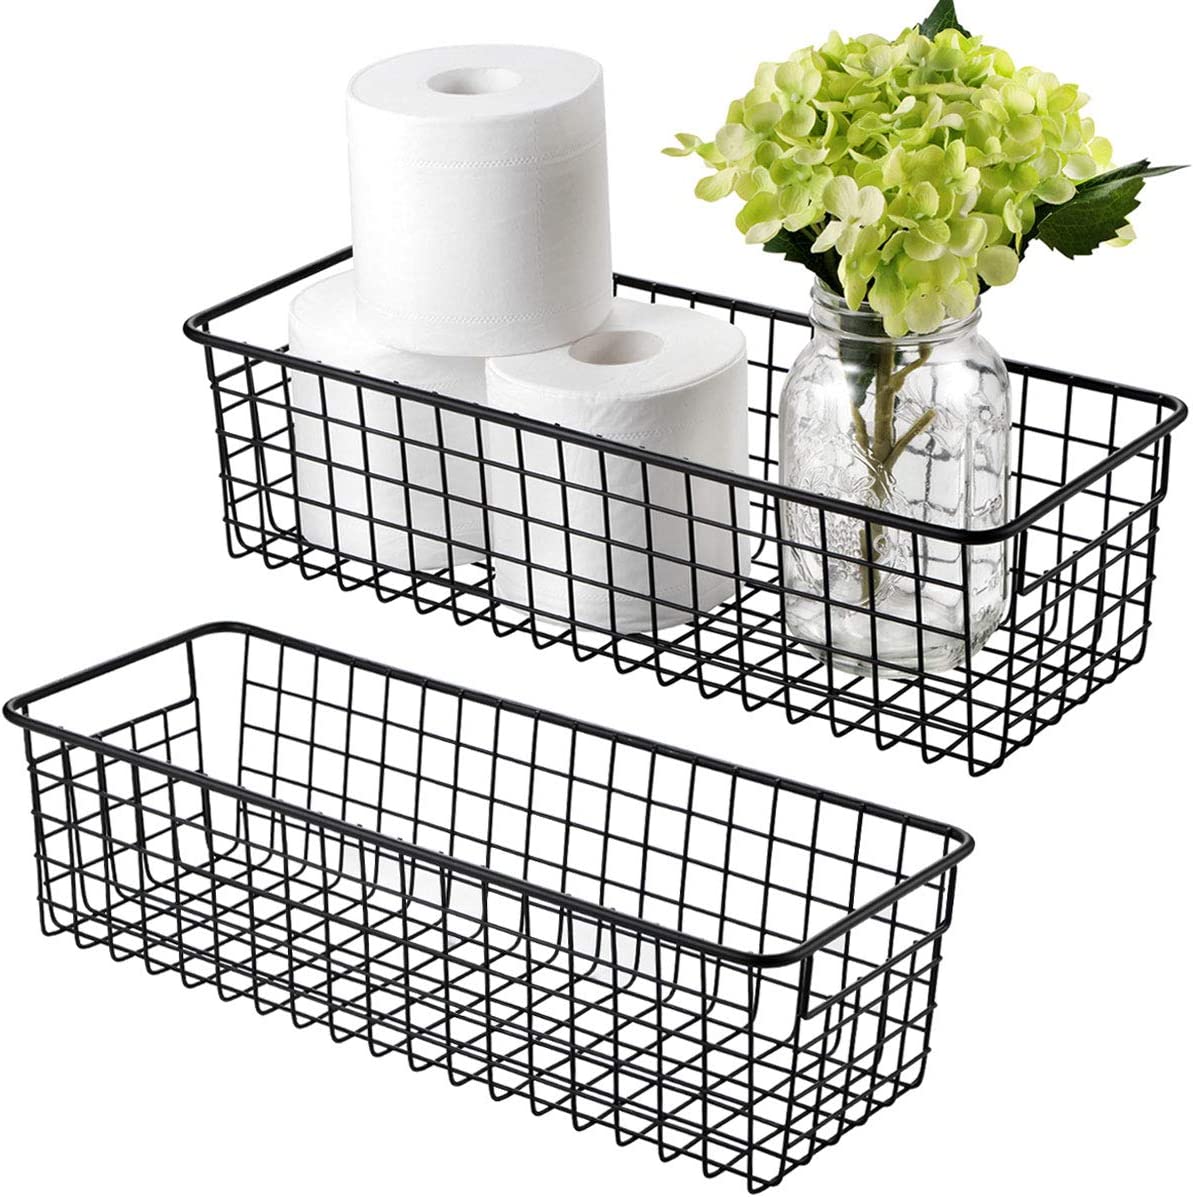 Metal Wire Storage Organizer Bin Basket(2 Pack) – Rustic Toilet Paper Holder – Storage Organizer for Bathroom, kitchen cabinets,Pantry, Laundry Room, Closets, Garage (Black) Featured Image